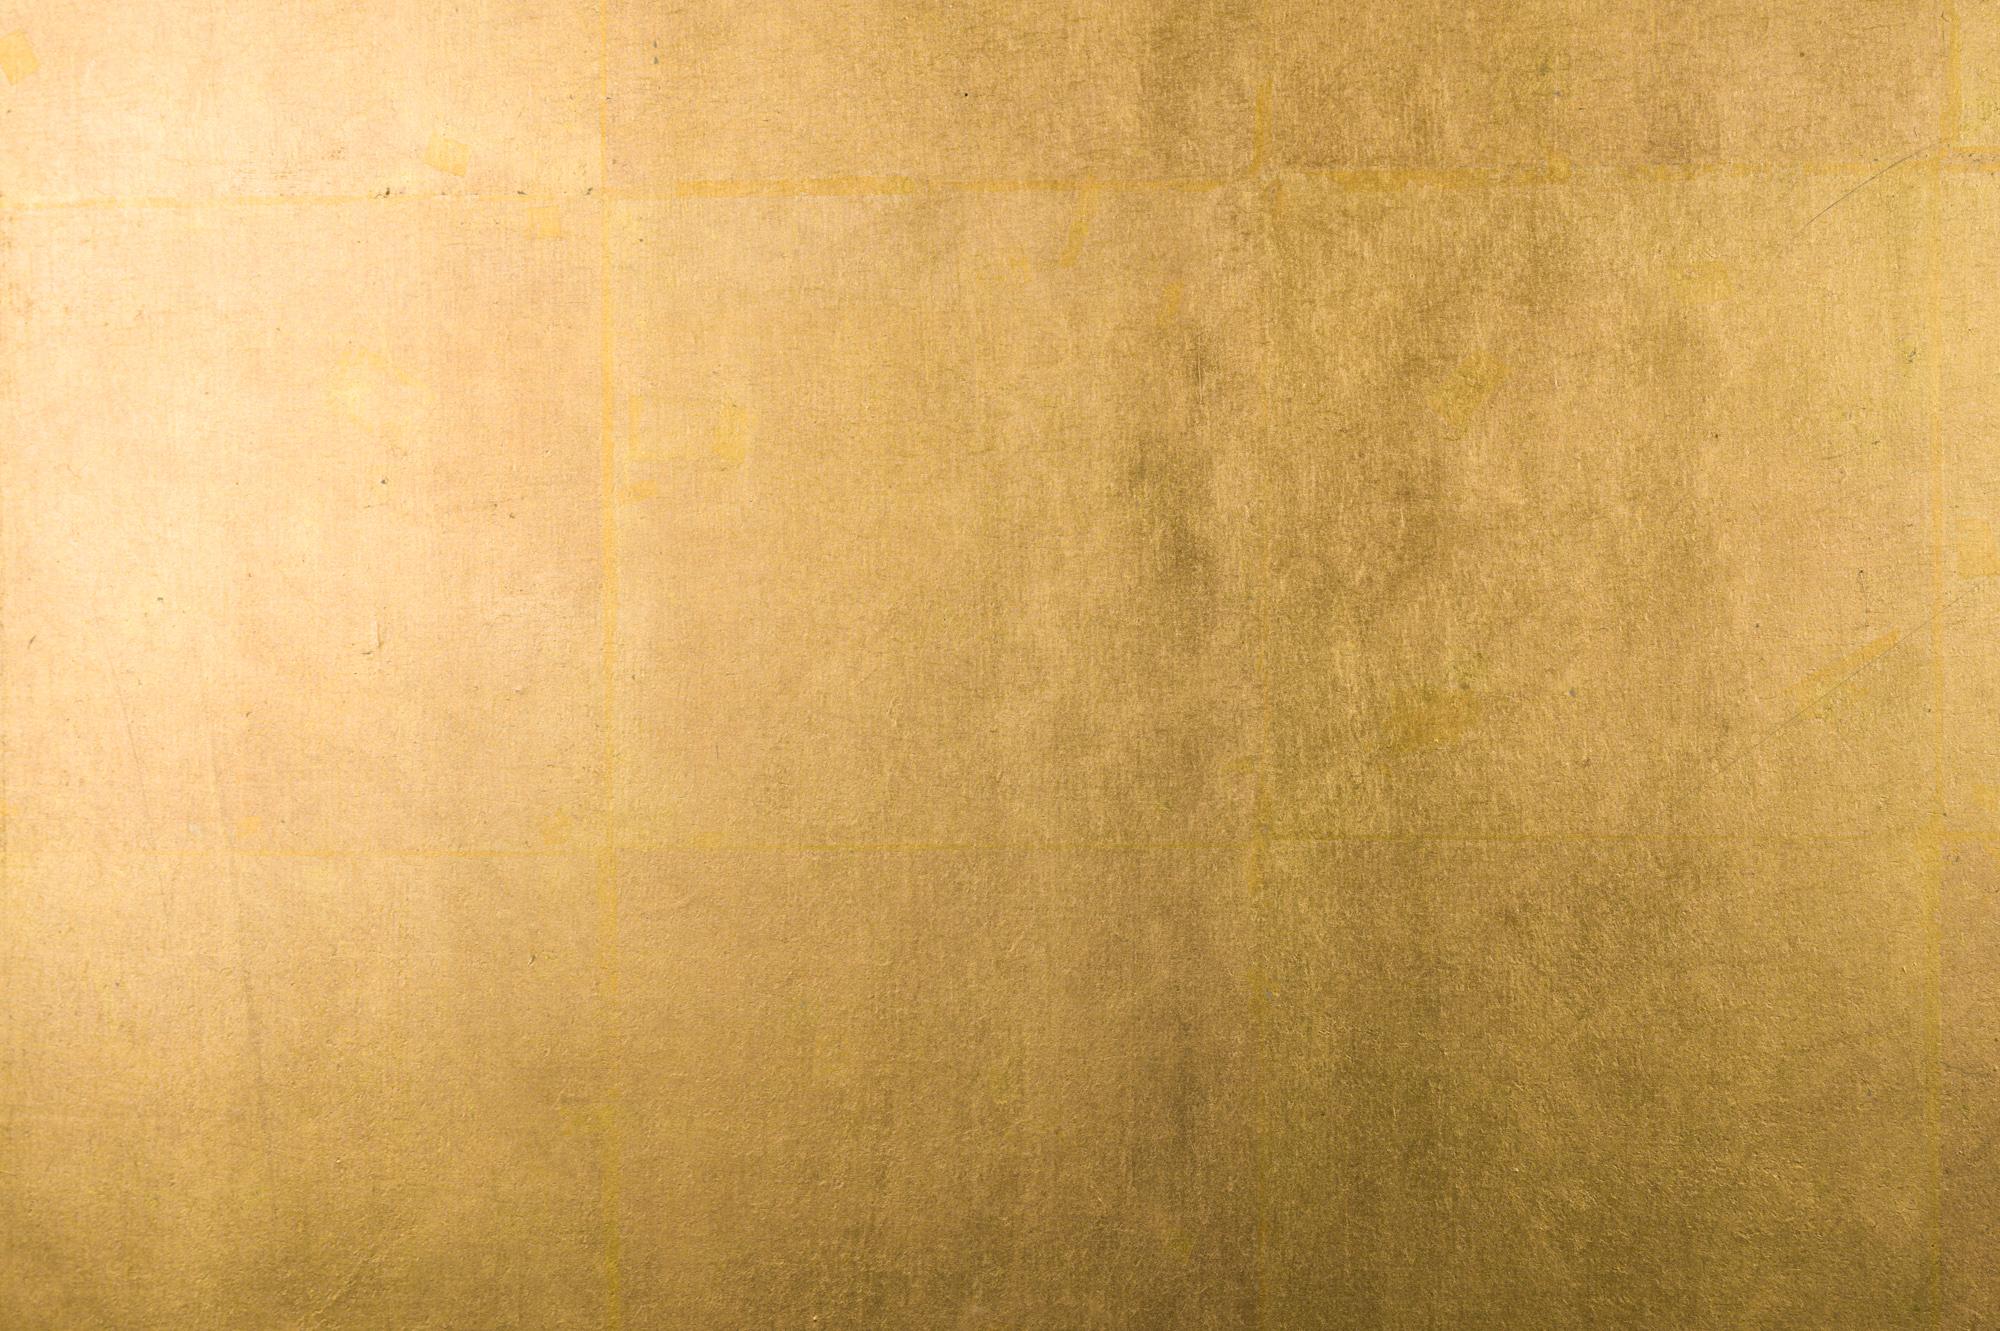 Japanese Six Panel Screen: Plain Gold Leaf, 'No Image' 4